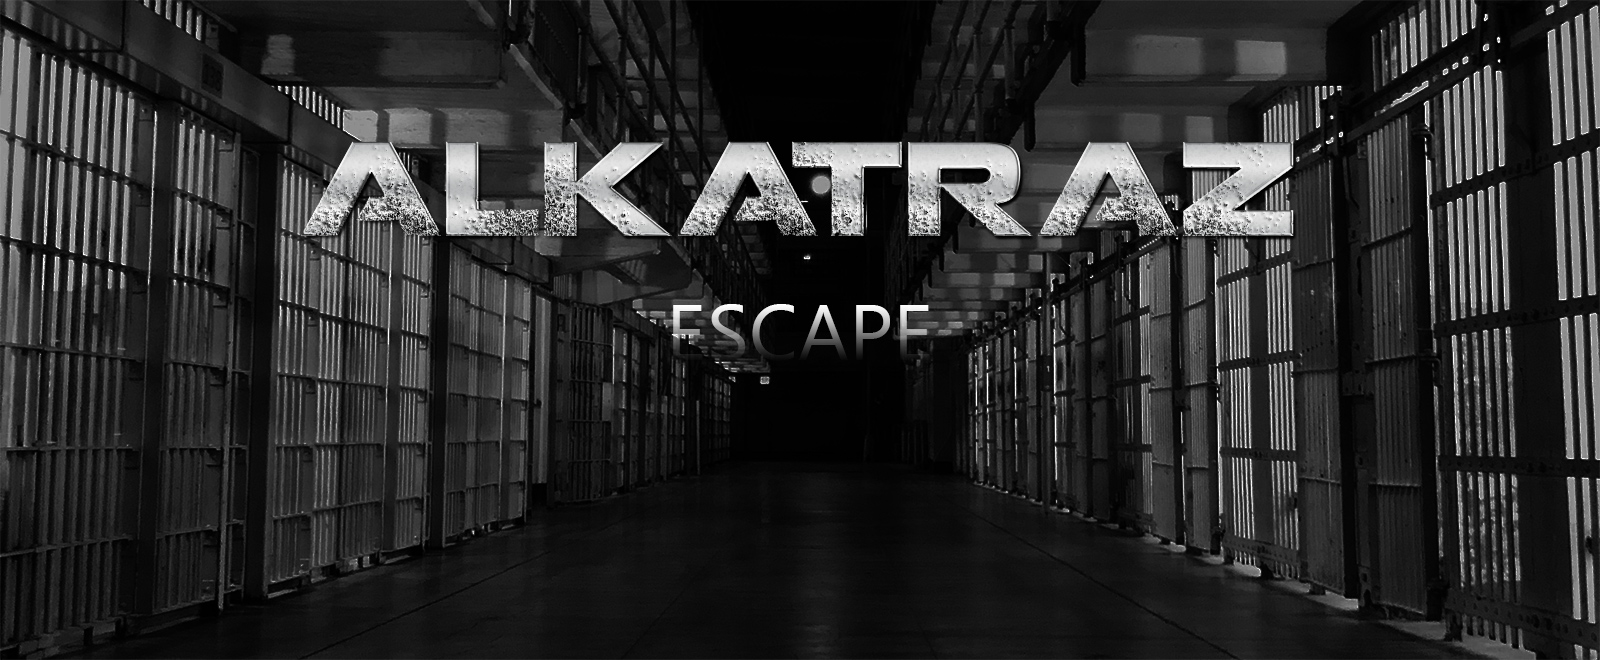 escape room alcatraz barcelona